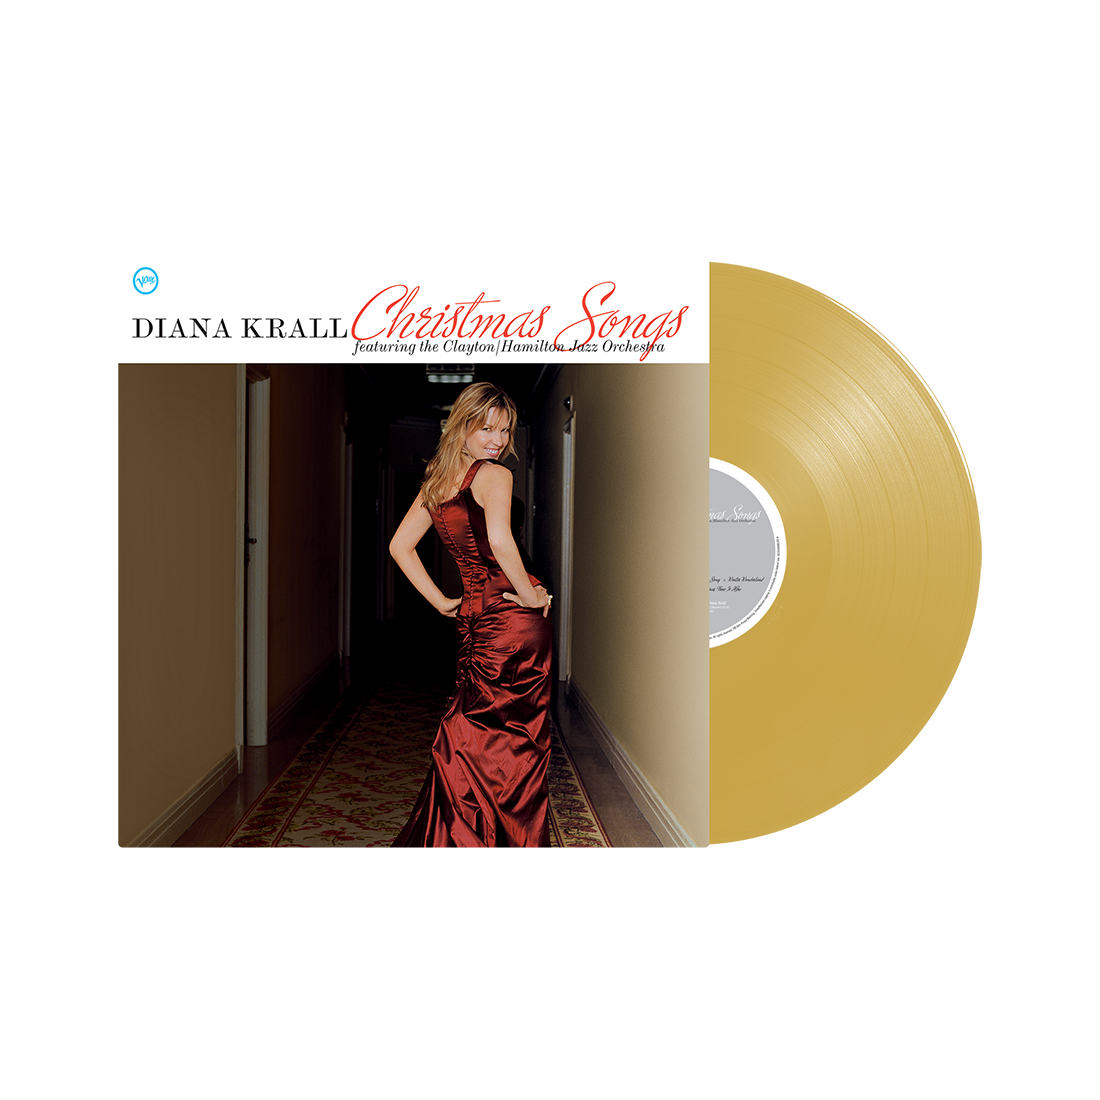 Diana Krall - Christmas Songs: Gold Vinyl LP